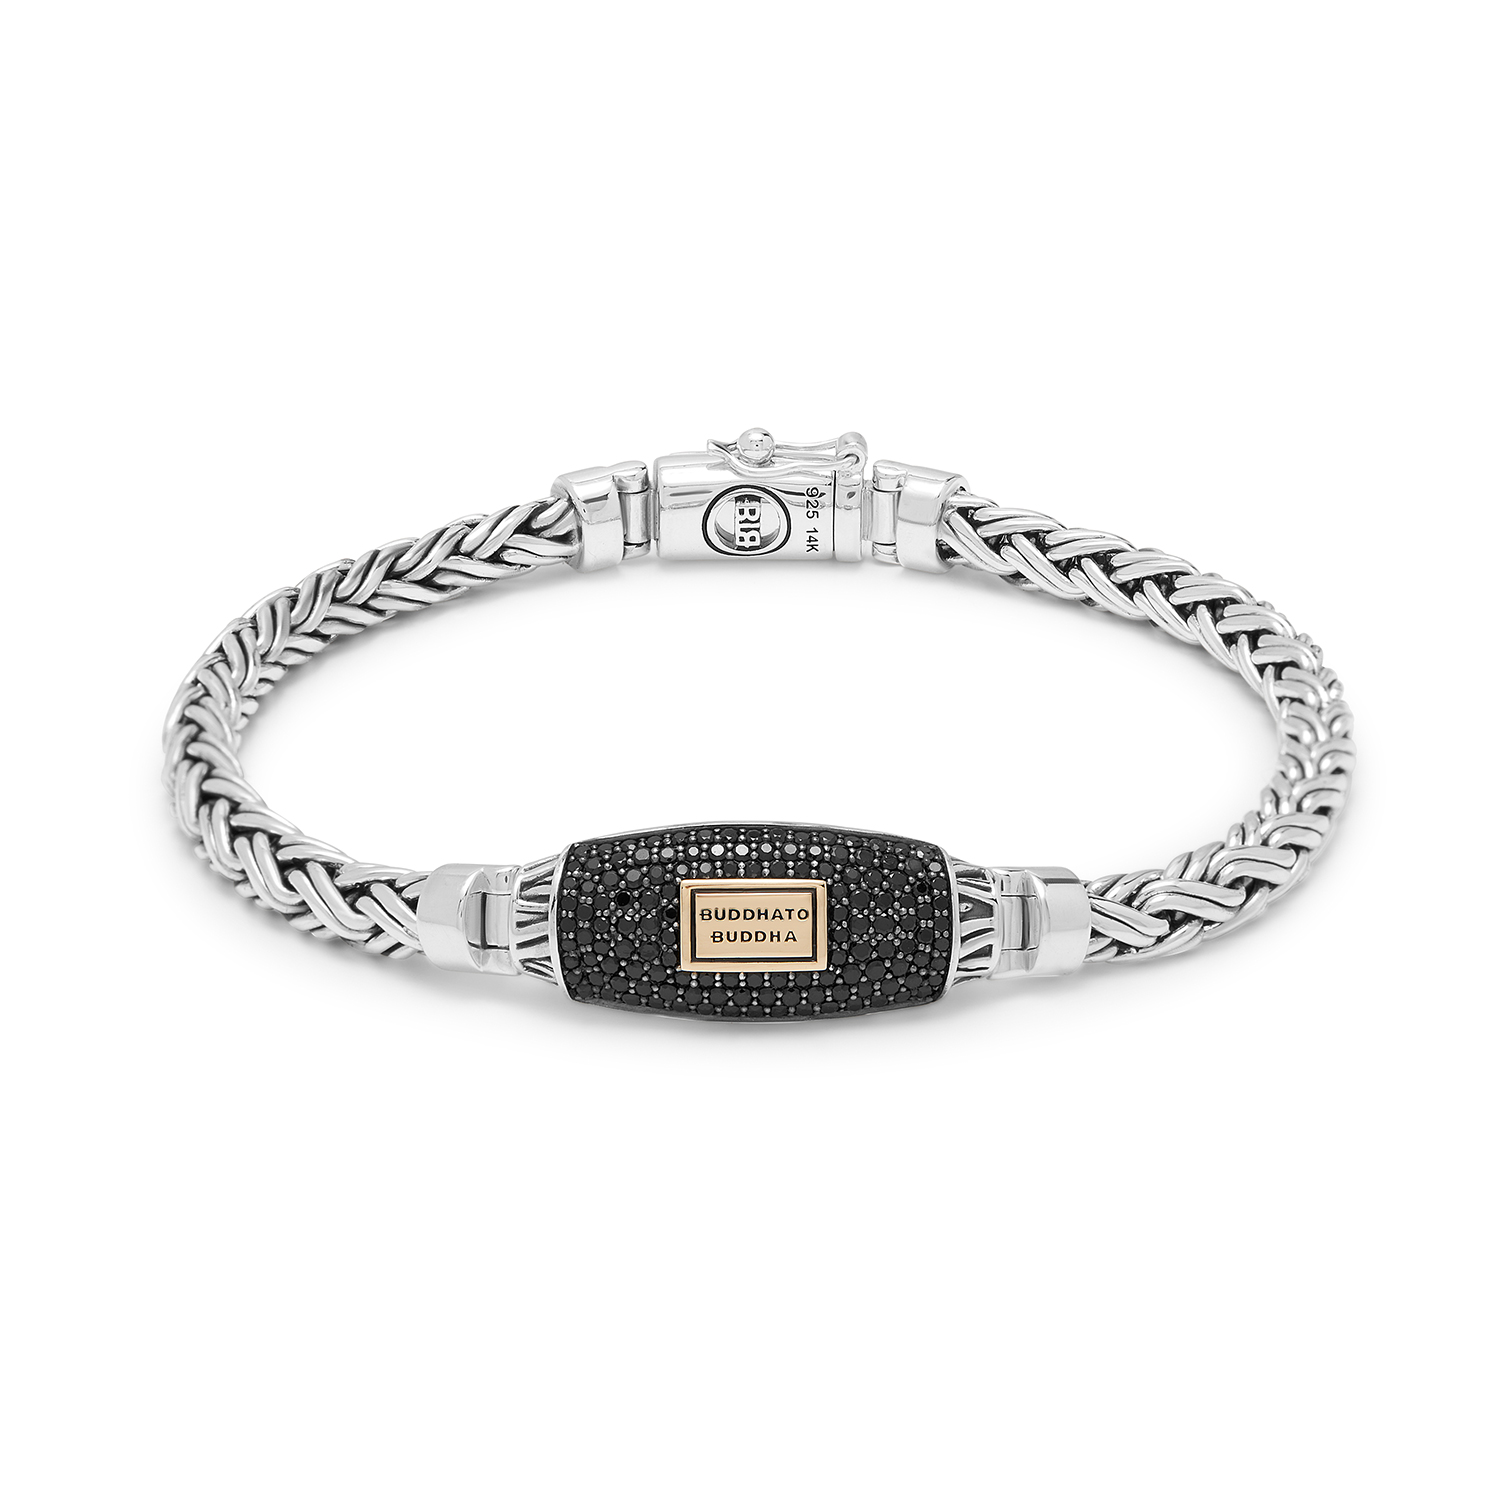 Buddha to buddha katja xs black spinel limited bracelet silver gold kt